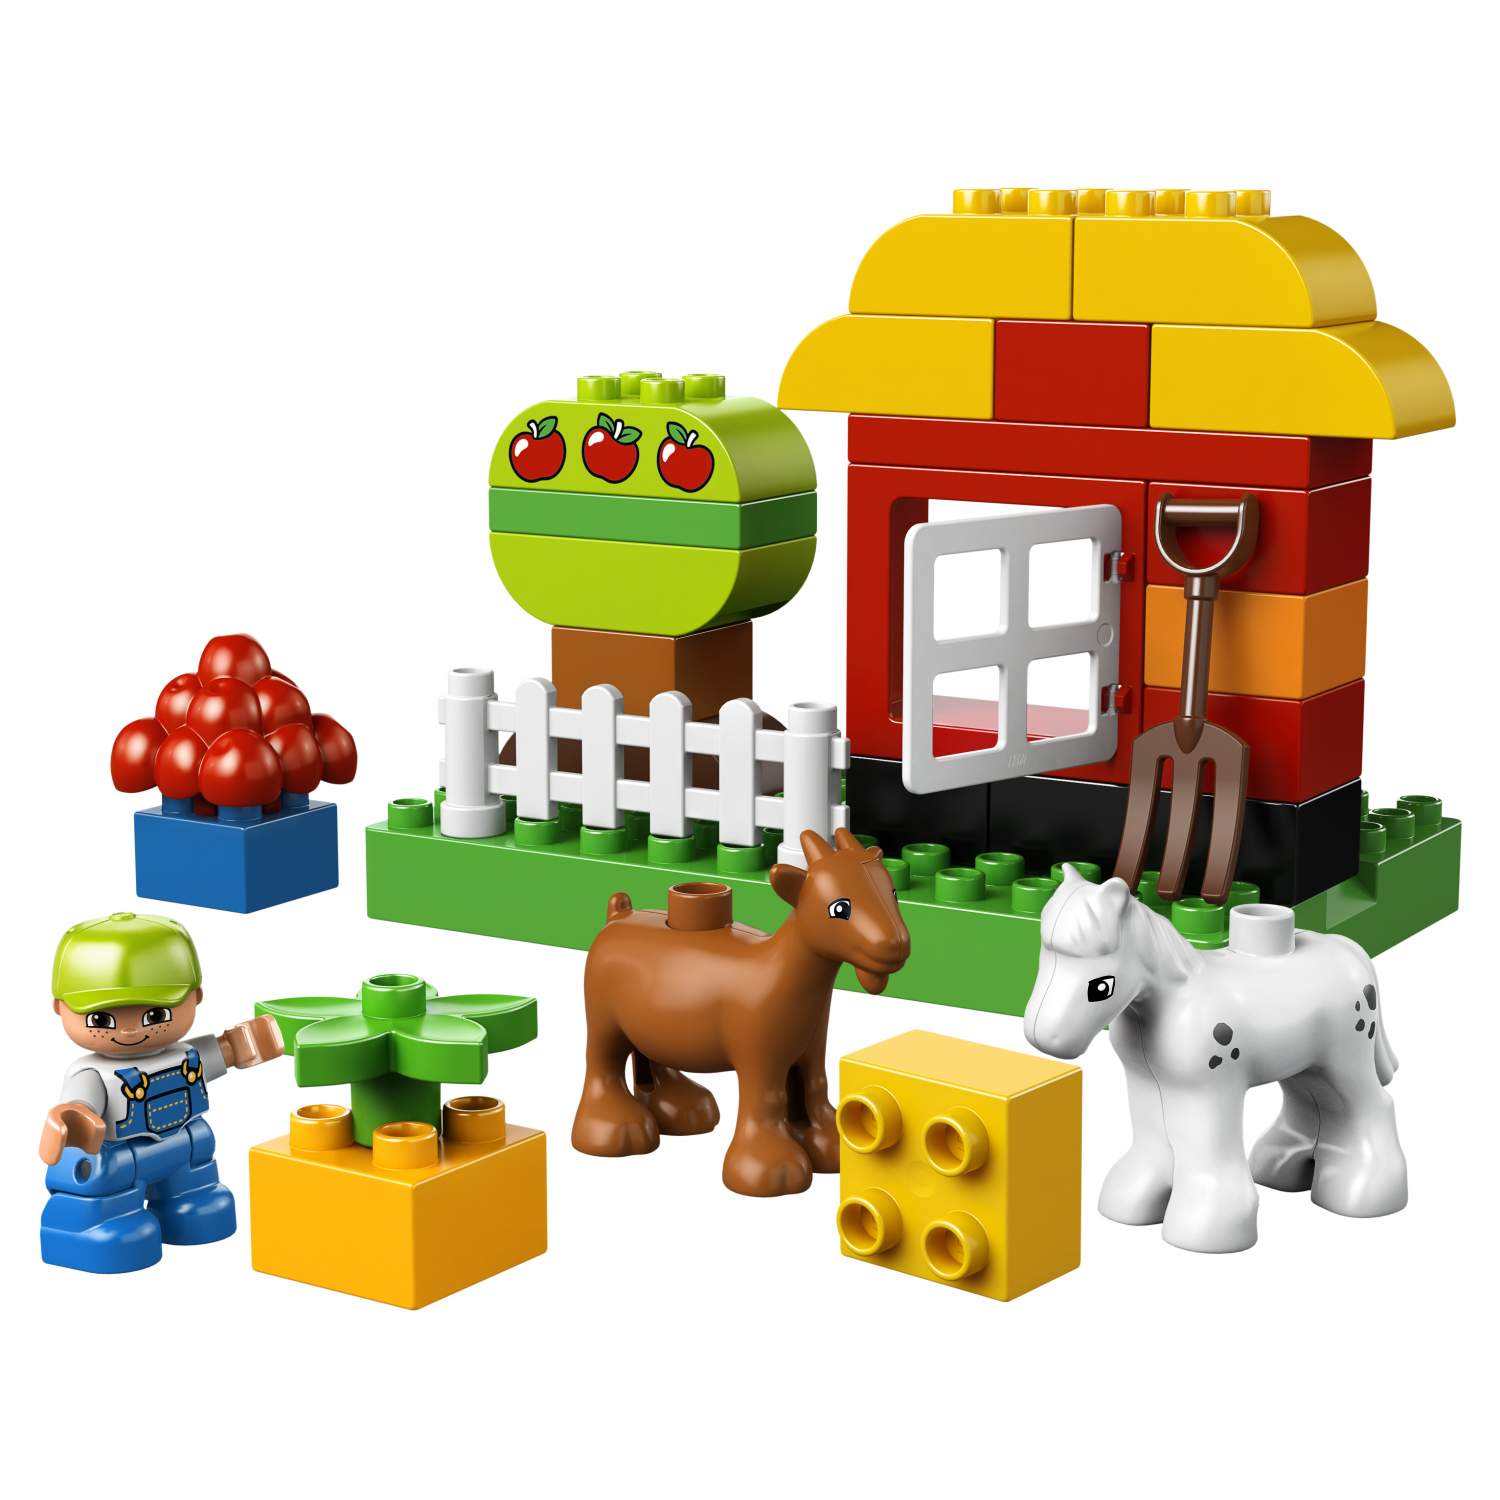 LEGO Duplo 10517